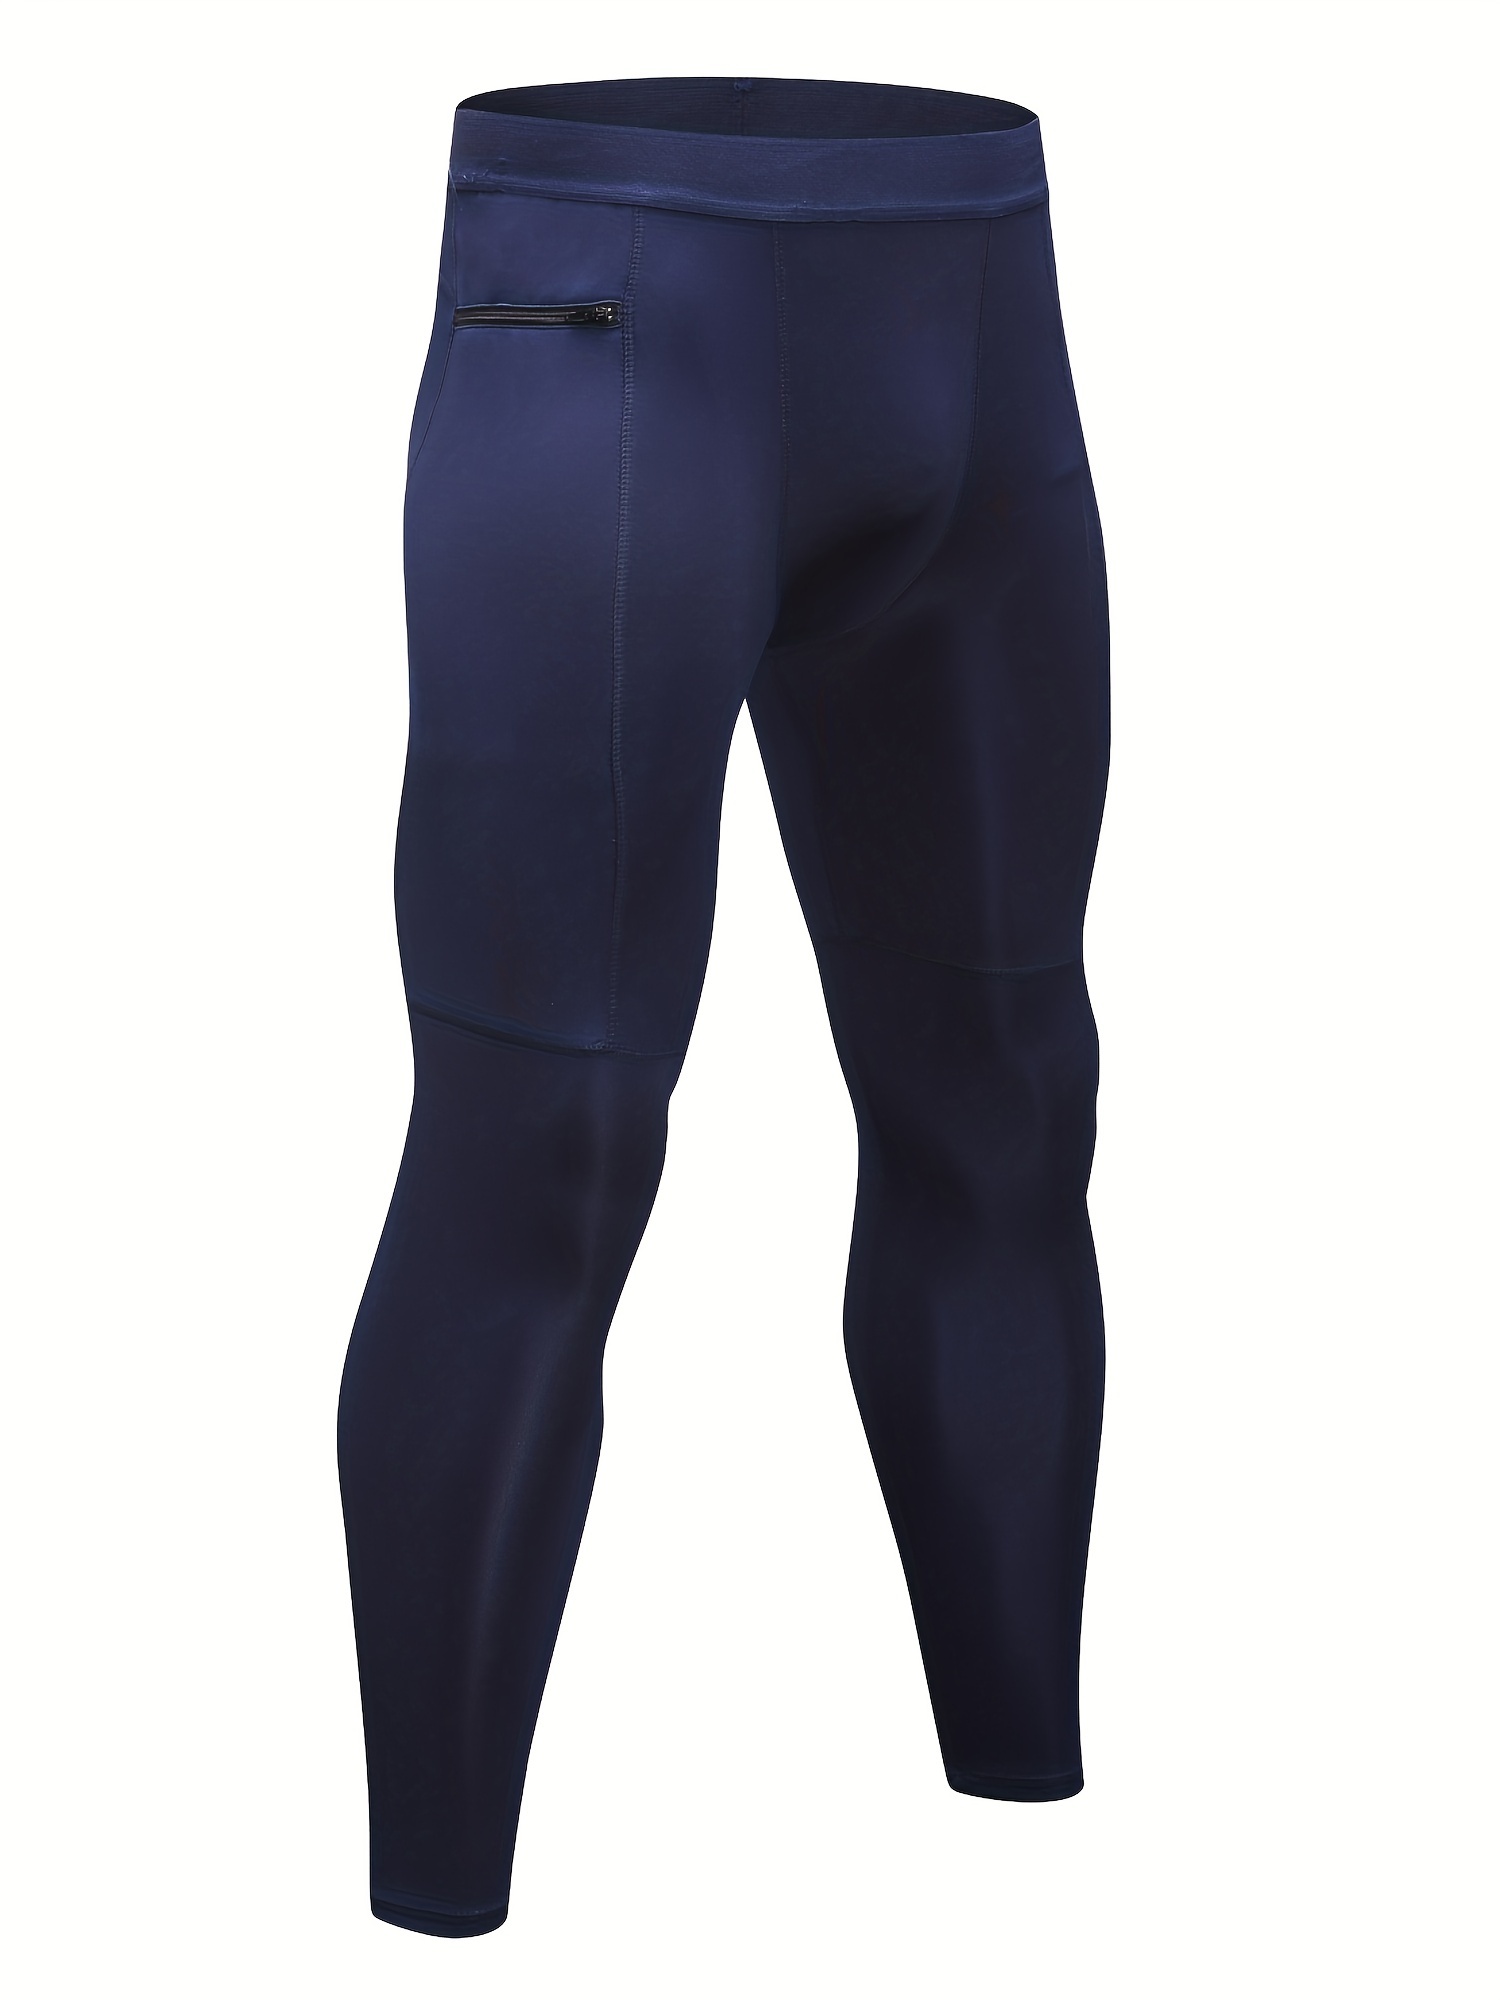 Men Running Tights Shorts Pants Sport Clothing Soccer Leggings Compression  Fitness Football Basketball Tights Zipper Pocket 2pcs - Running Pants -  AliExpress